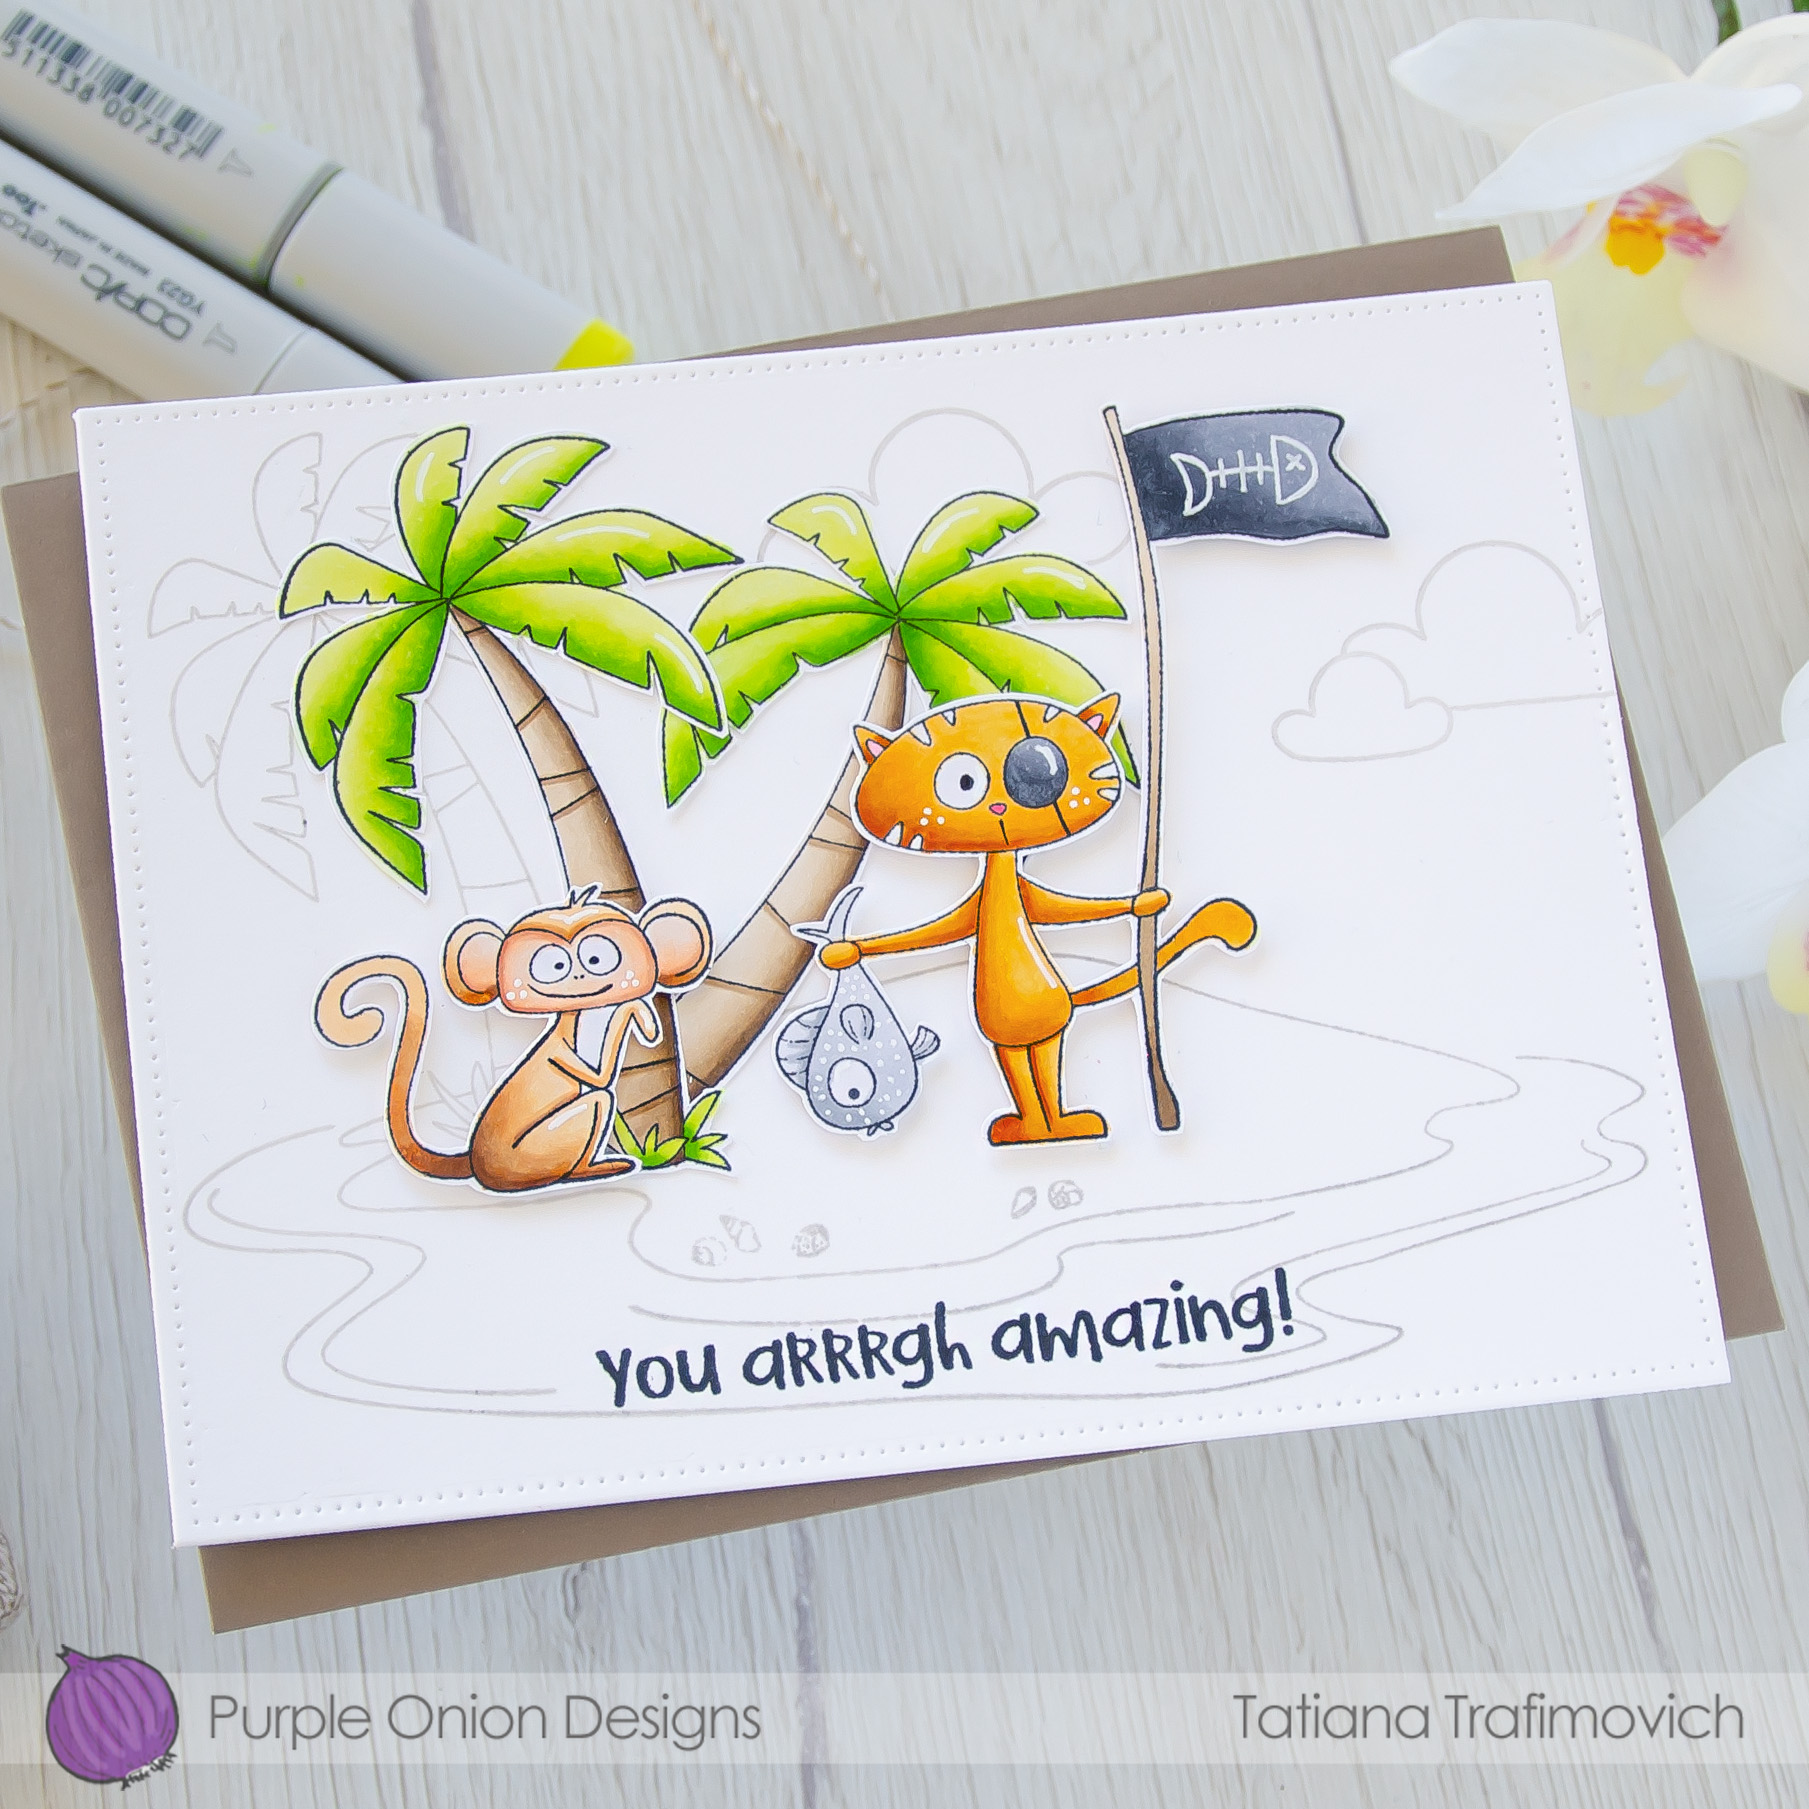 You Arrrgh Amazing! #handmade card by Tatiana Trafimovich #tatianacraftandart - stamps by Purple Onion Designs